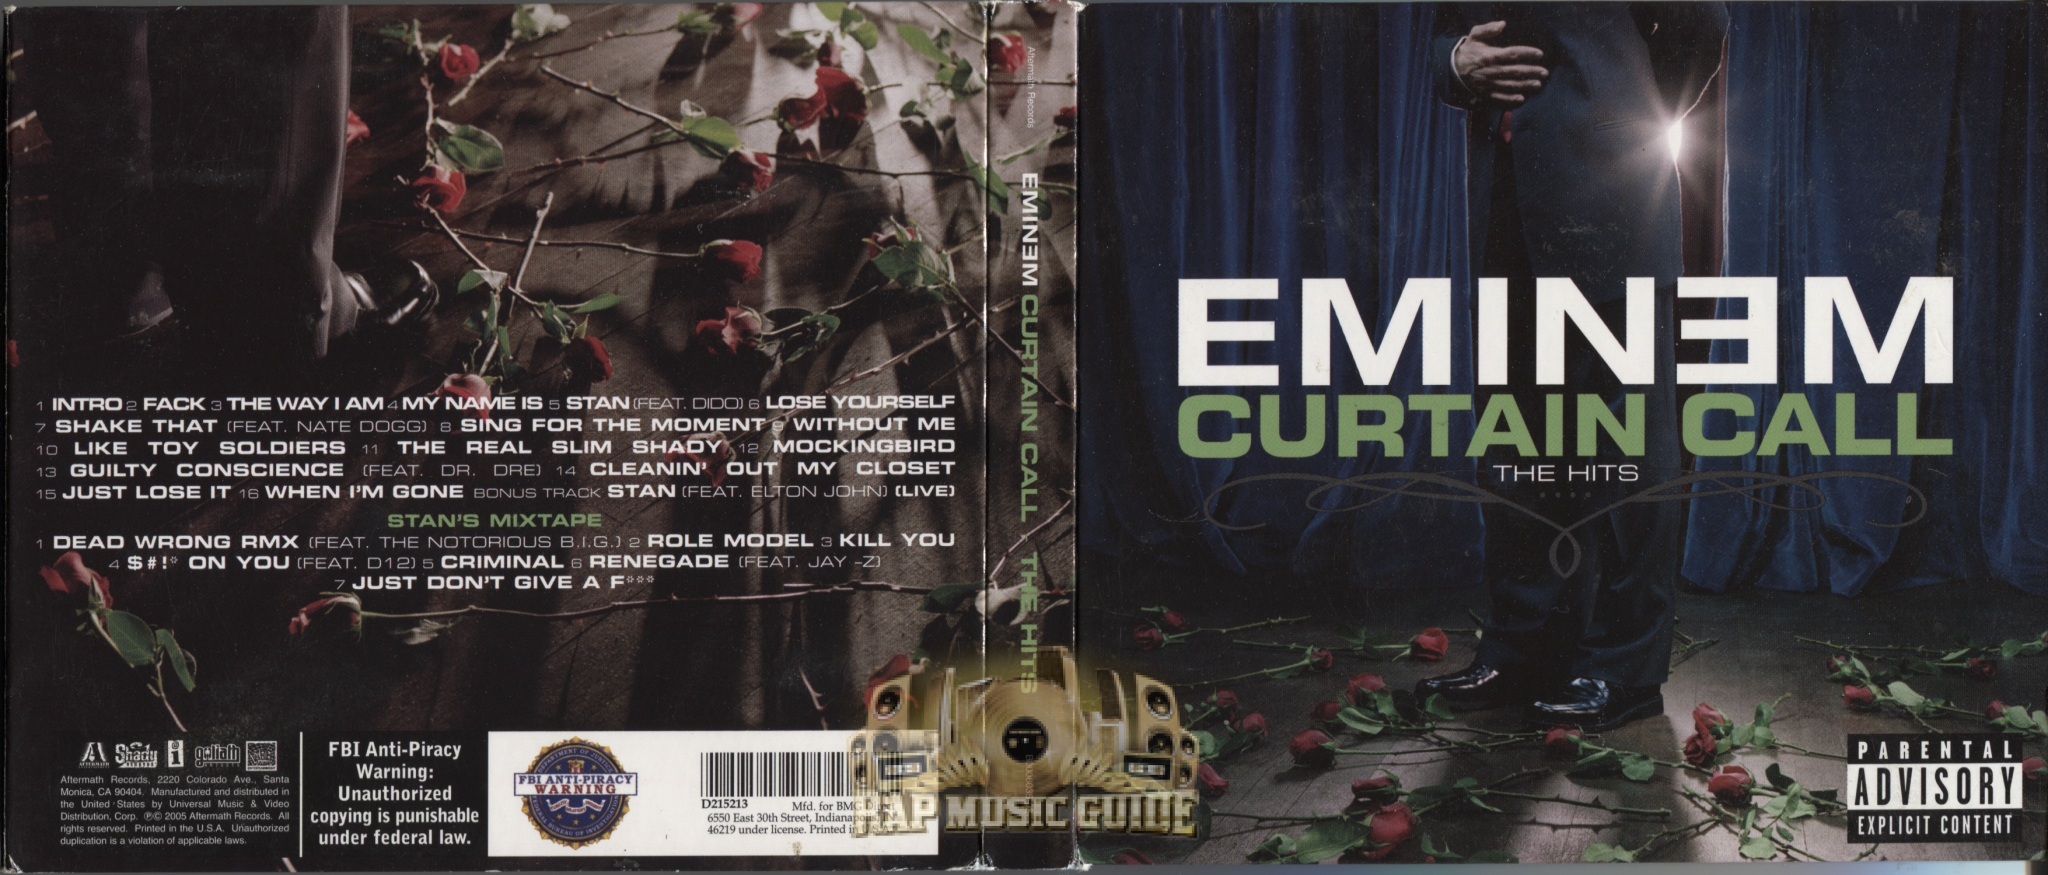 Eminem curtain call. Eminem. Curtain Call. The Hits. 2005. Обложка альбома Эминем Curtain Call. Eminem Curtain Call the Hits обложка. Eminem Curtain Call диск.